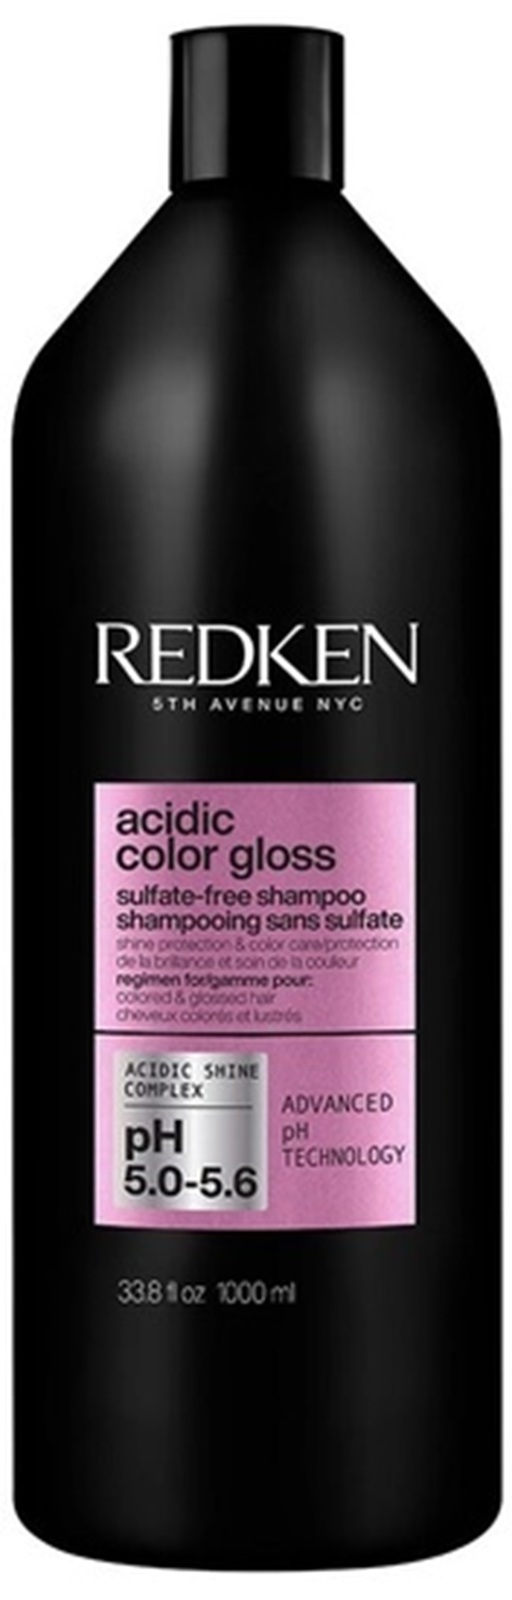 Redken Acidic Color Gloss Sulfate Free Shampoo 33.8oz - $85.52